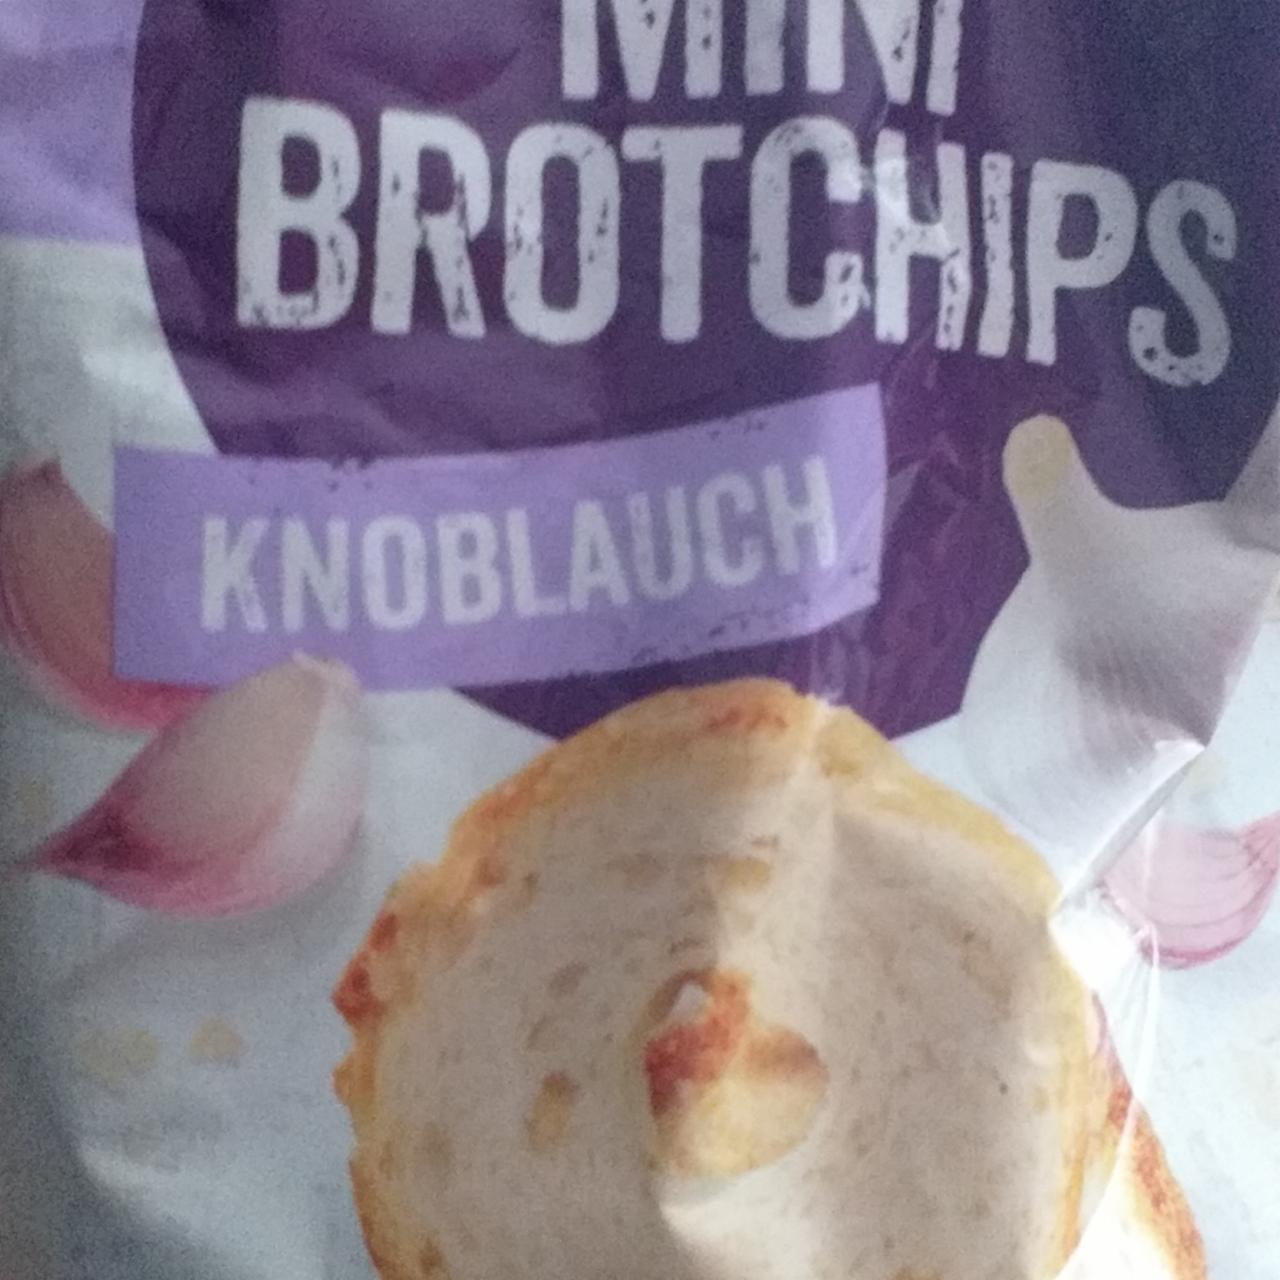 Mini Brotchips hodnoty - kJ Knoblauch a kalorie, Snacks nutriční Sun